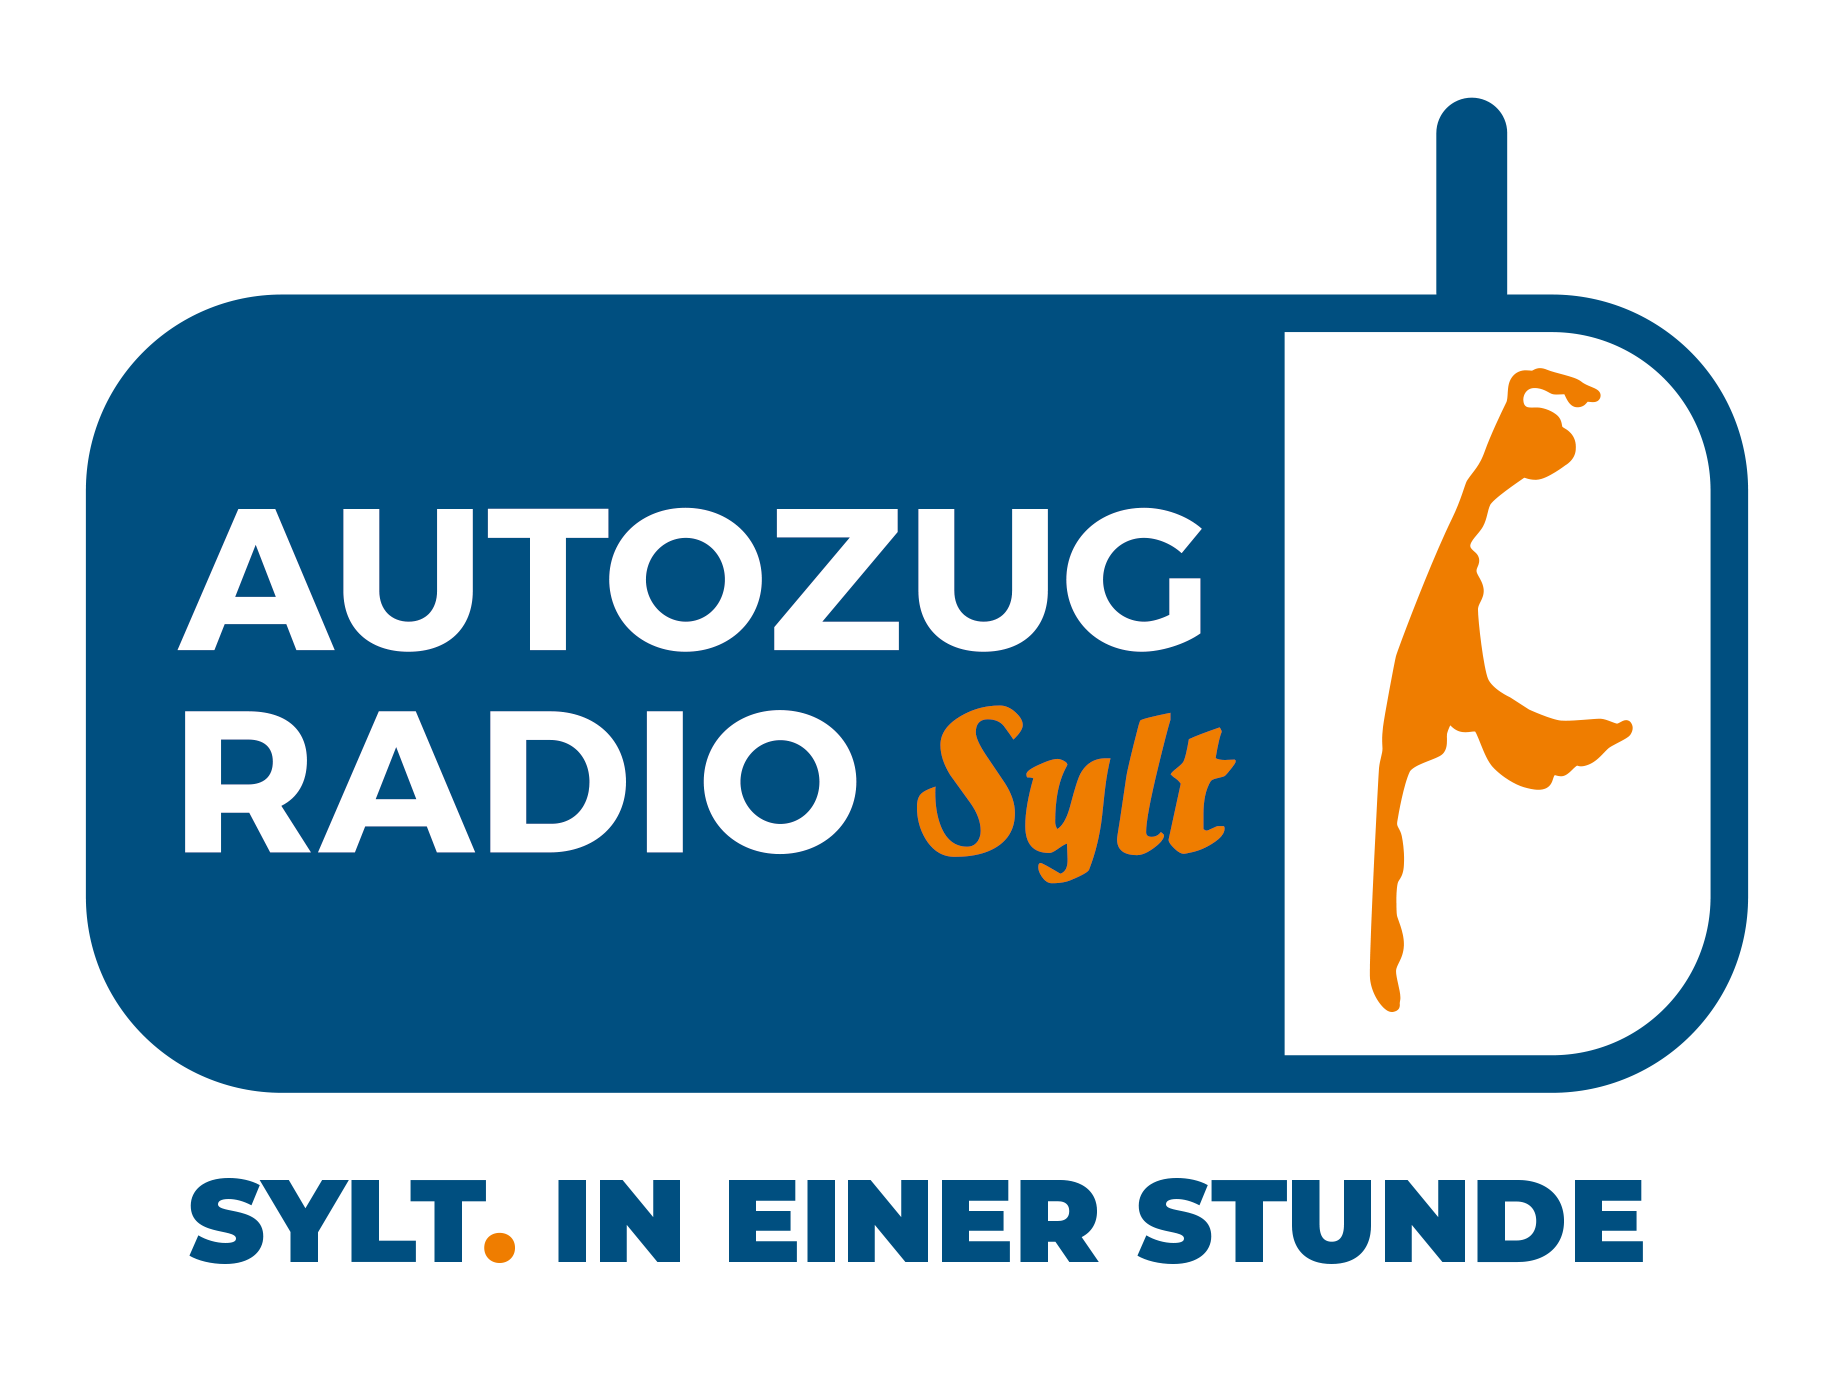 Autozugradio Sylt